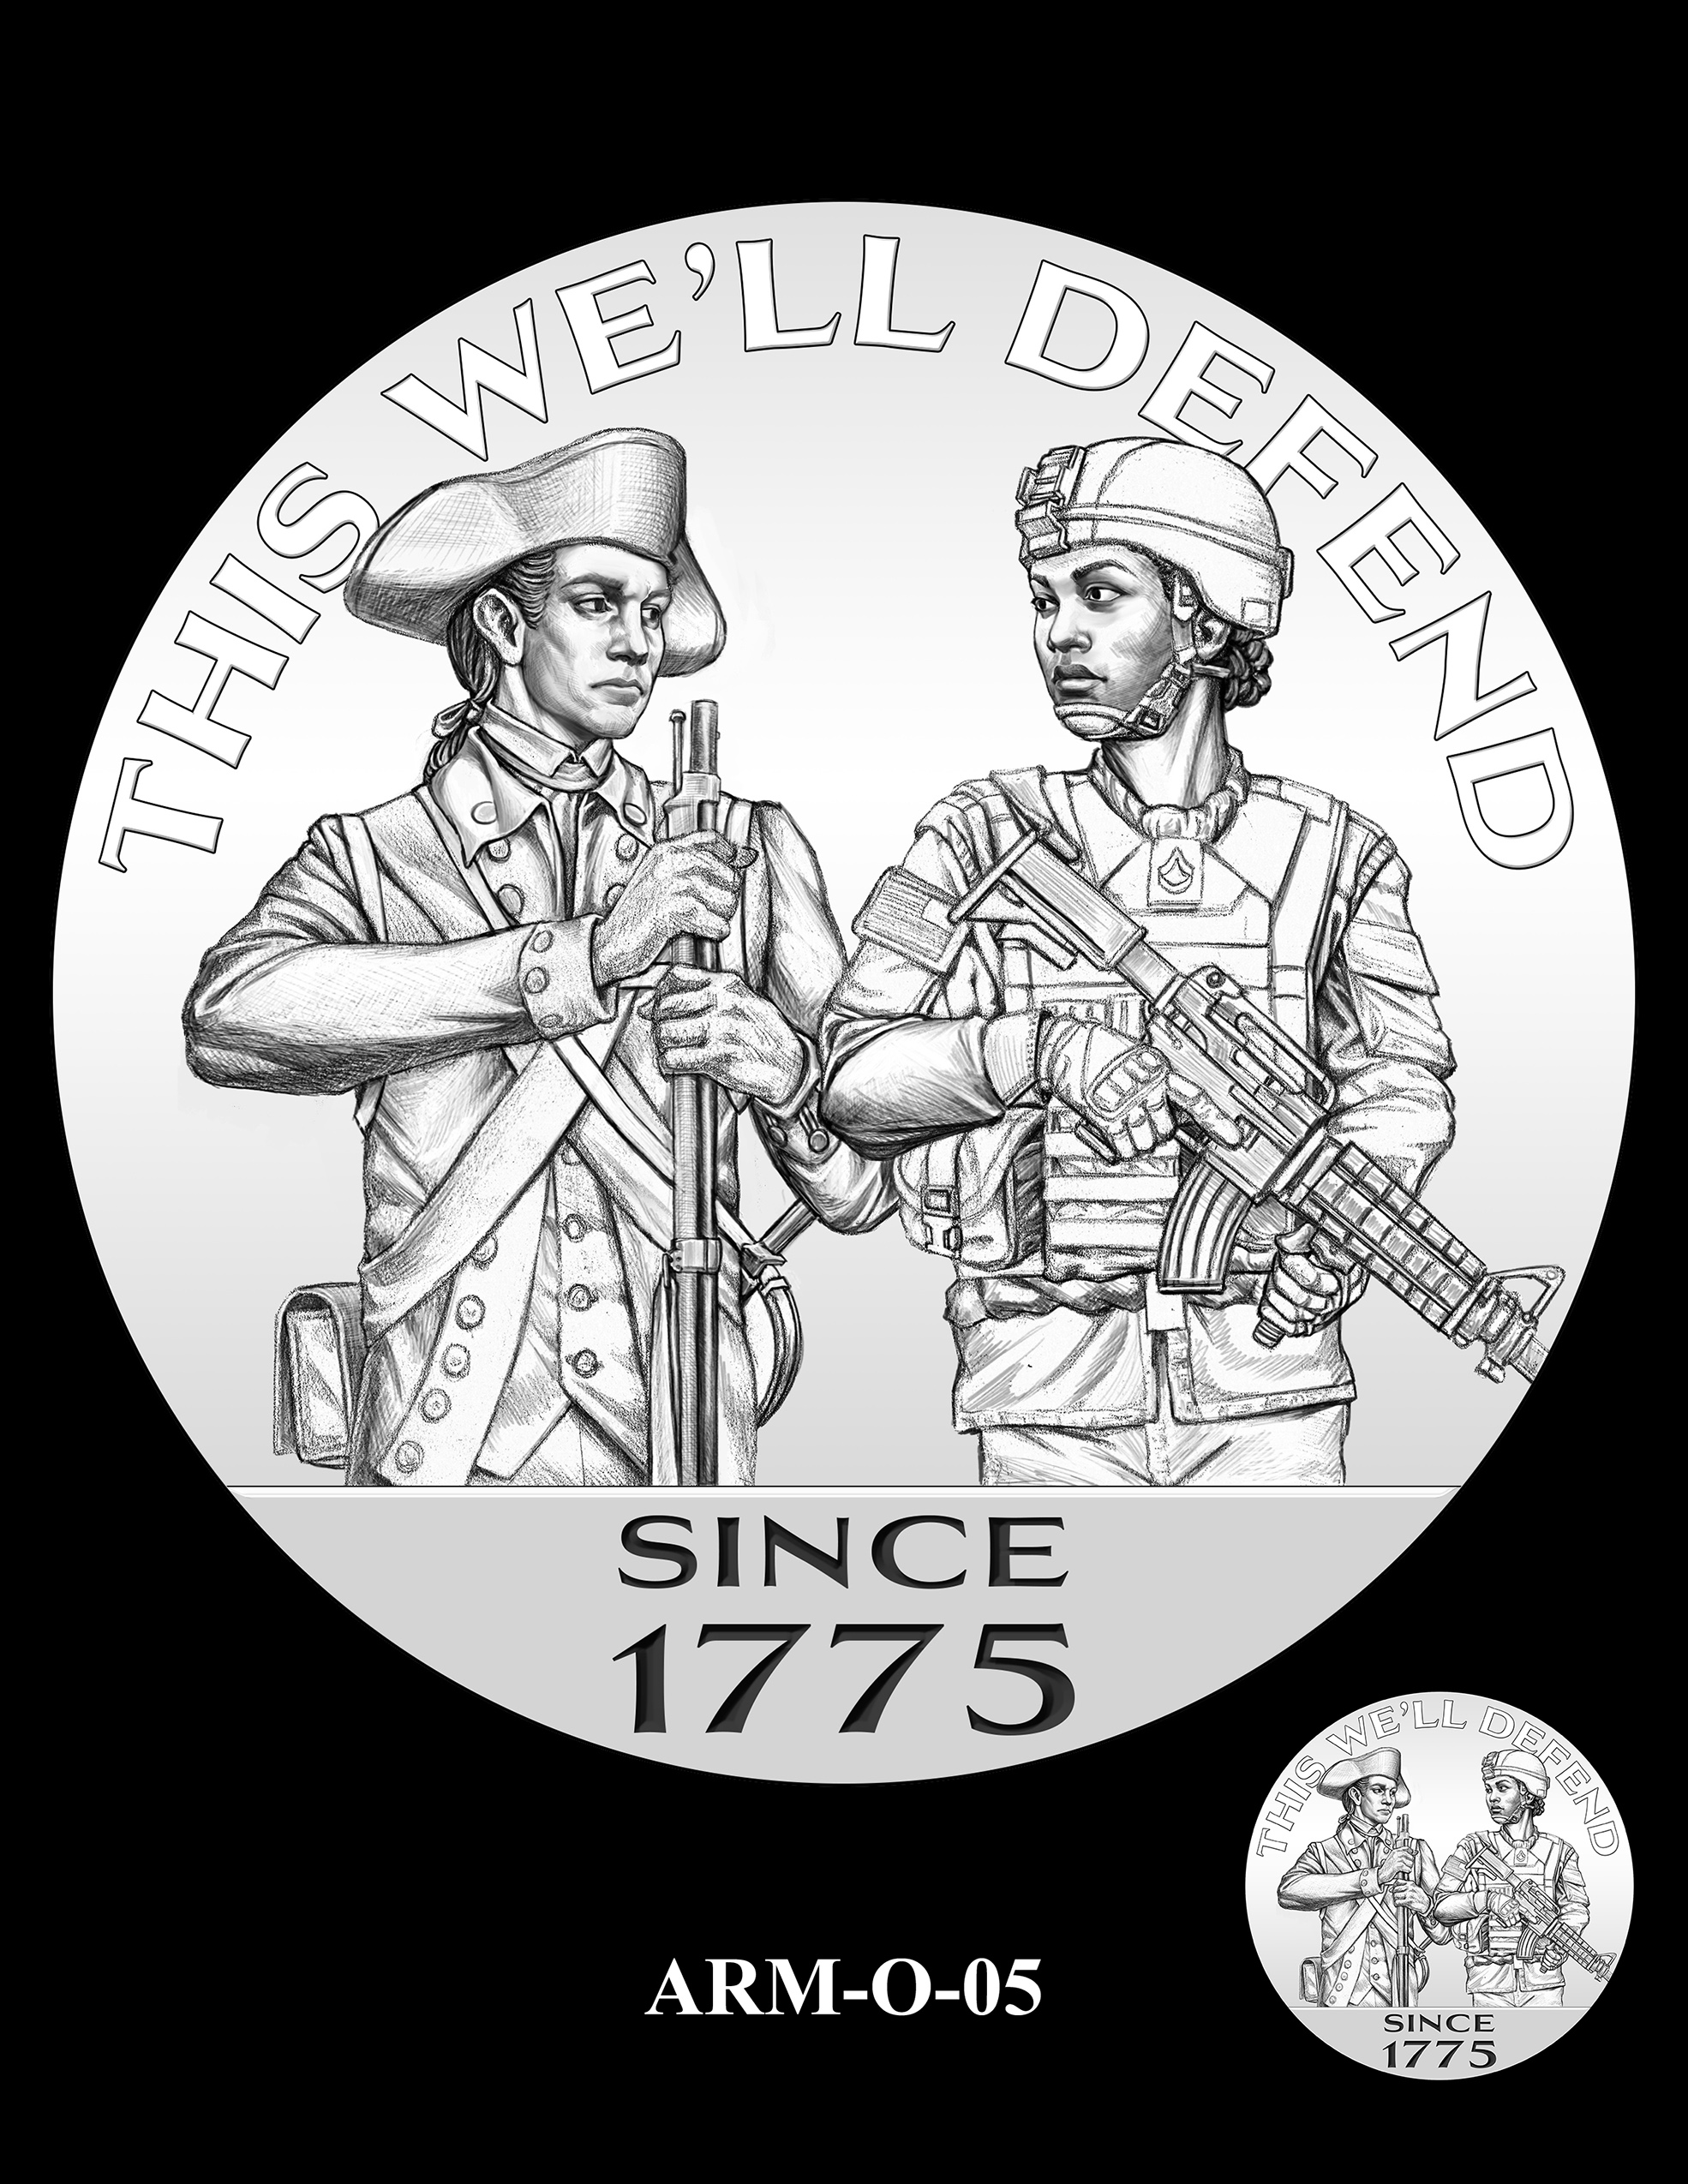 ARM-O-05 -- United States Army Silver Medal